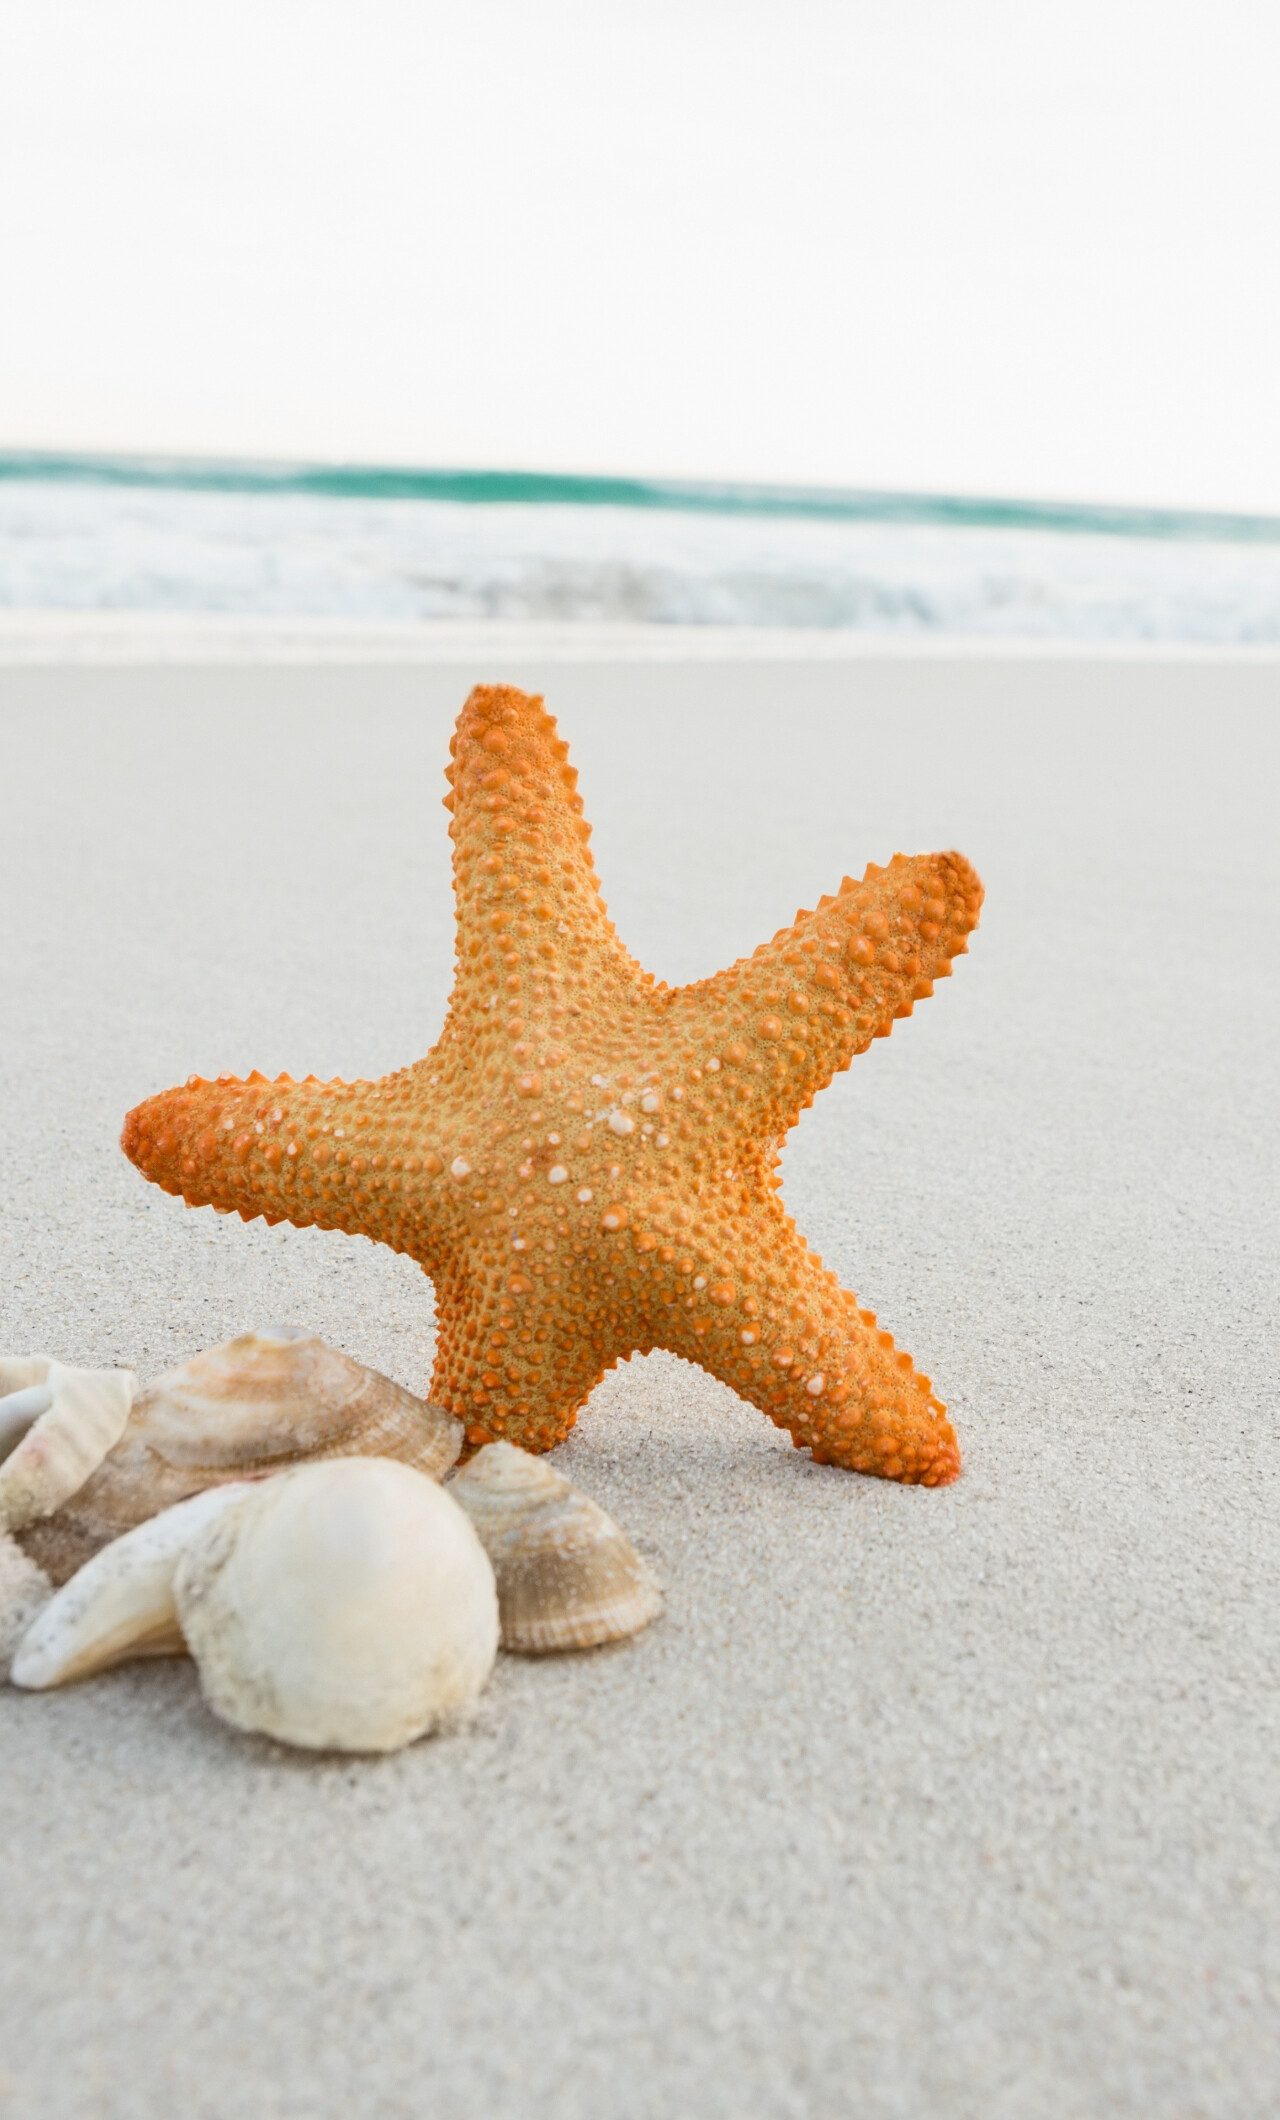 Starfish: Download seashell, starfish, sand, beach  wallpaper, iphone 6  plus,  hd image, background, 5010. 1280x2120 HD Wallpaper.